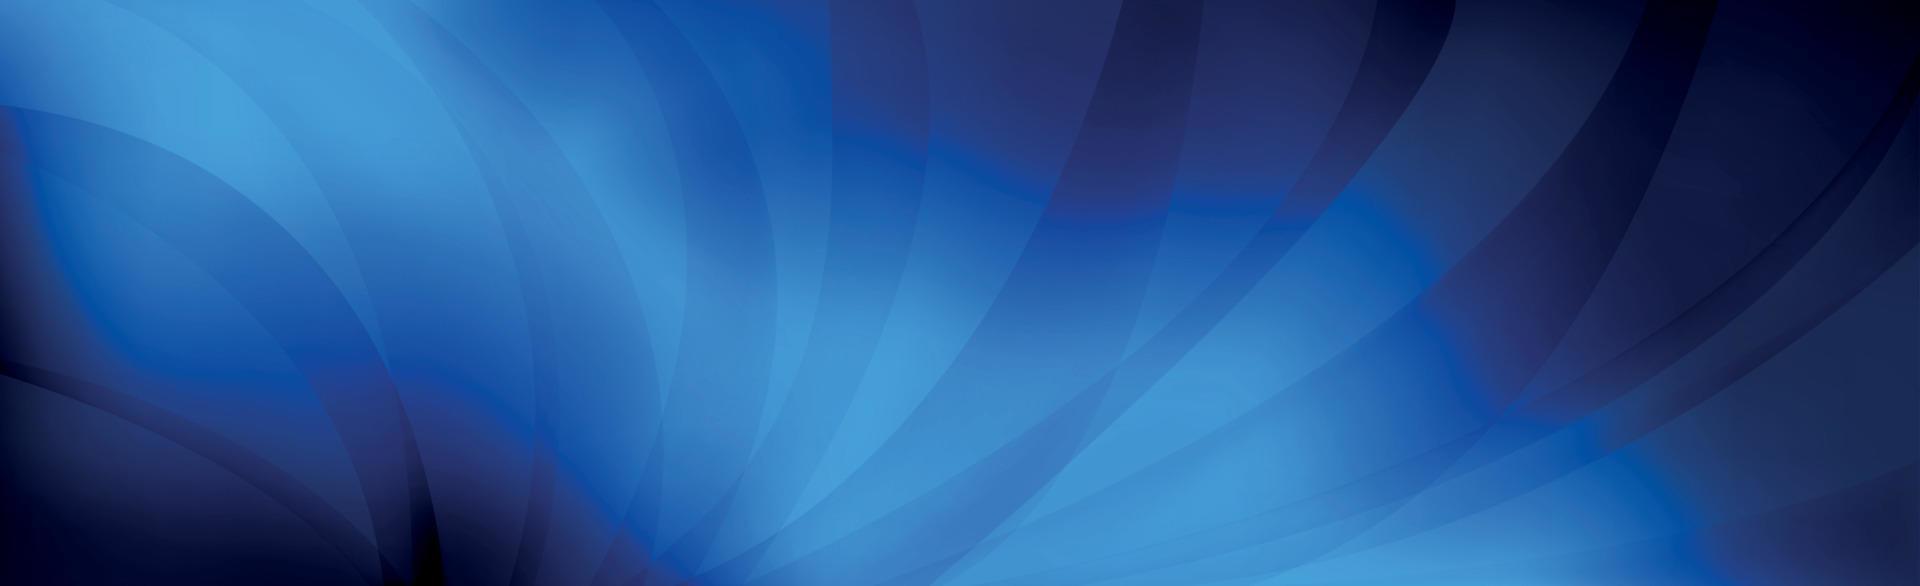 Panorama abstrakt Web-Hintergrund blau lila Farbverlauf - Vektor